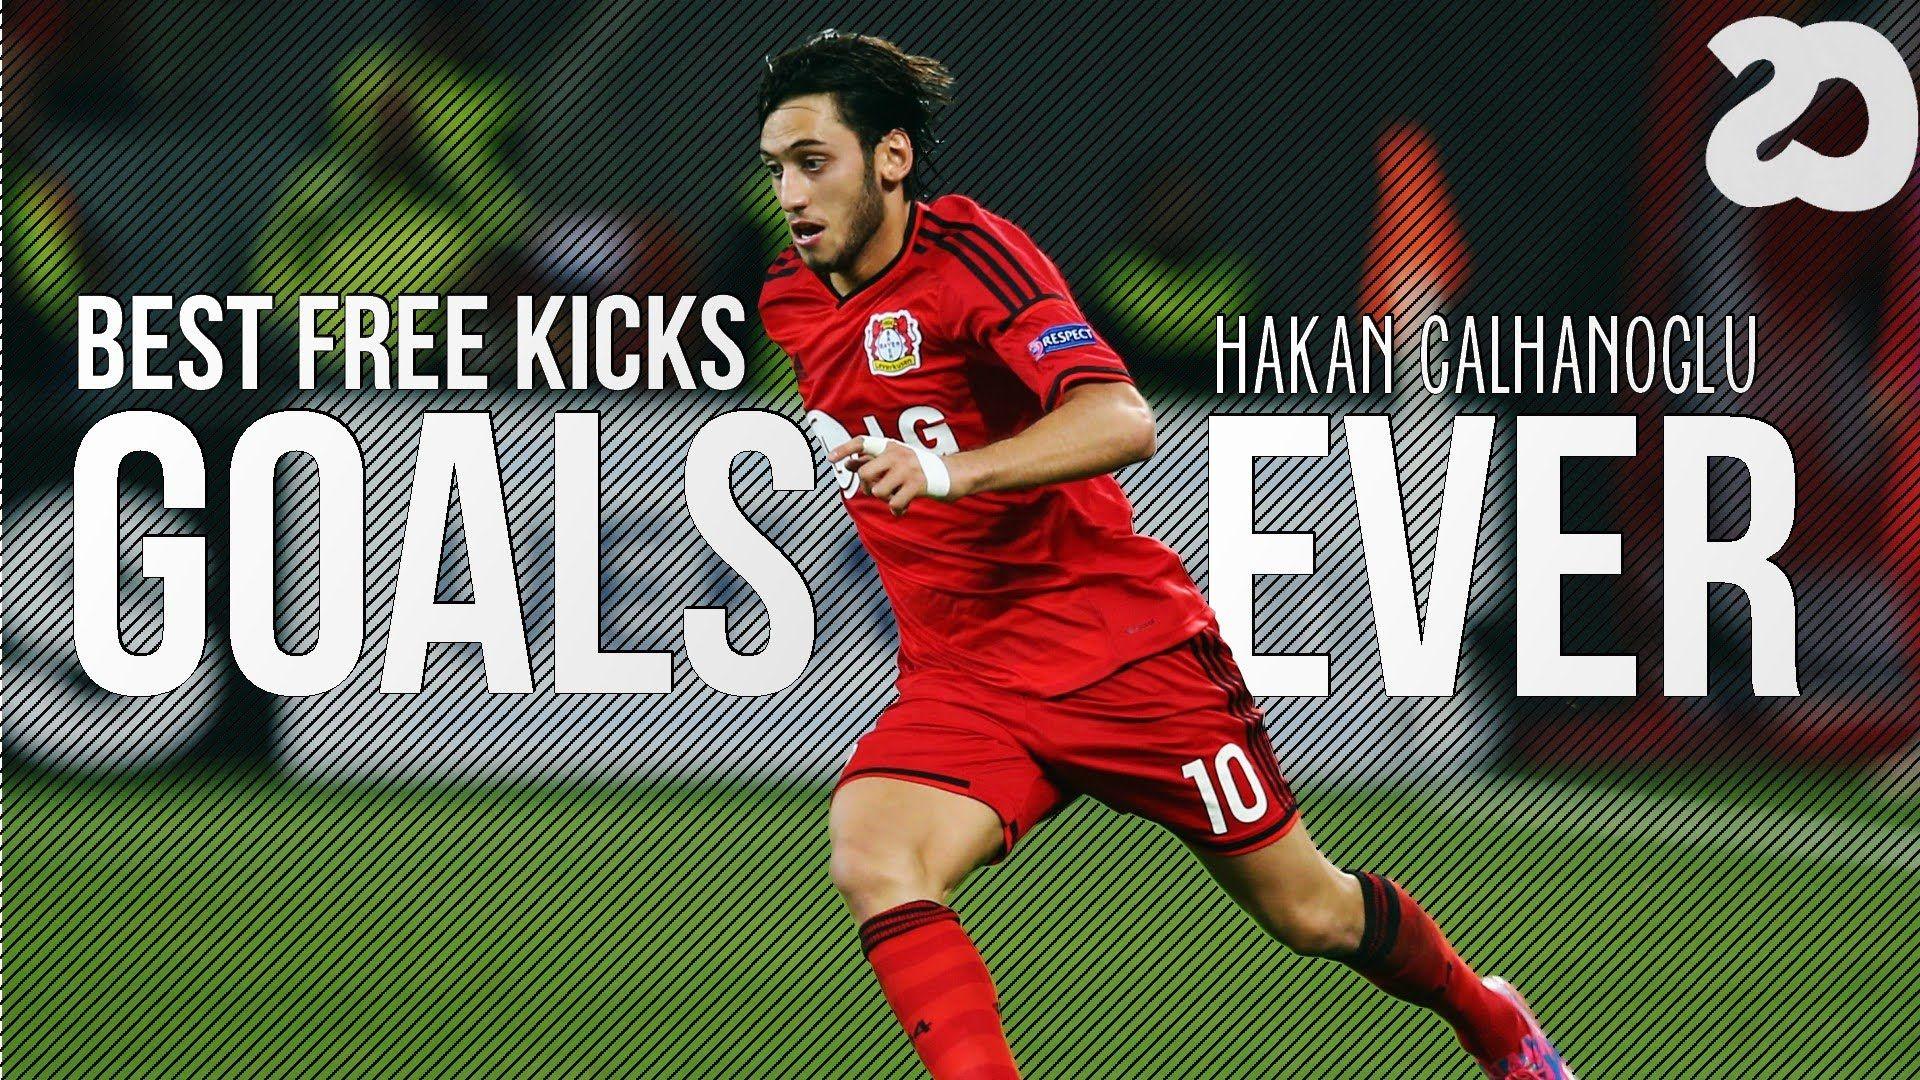 Hakan Calhanoglu ○ Best Free Kicks Goals ○ HD